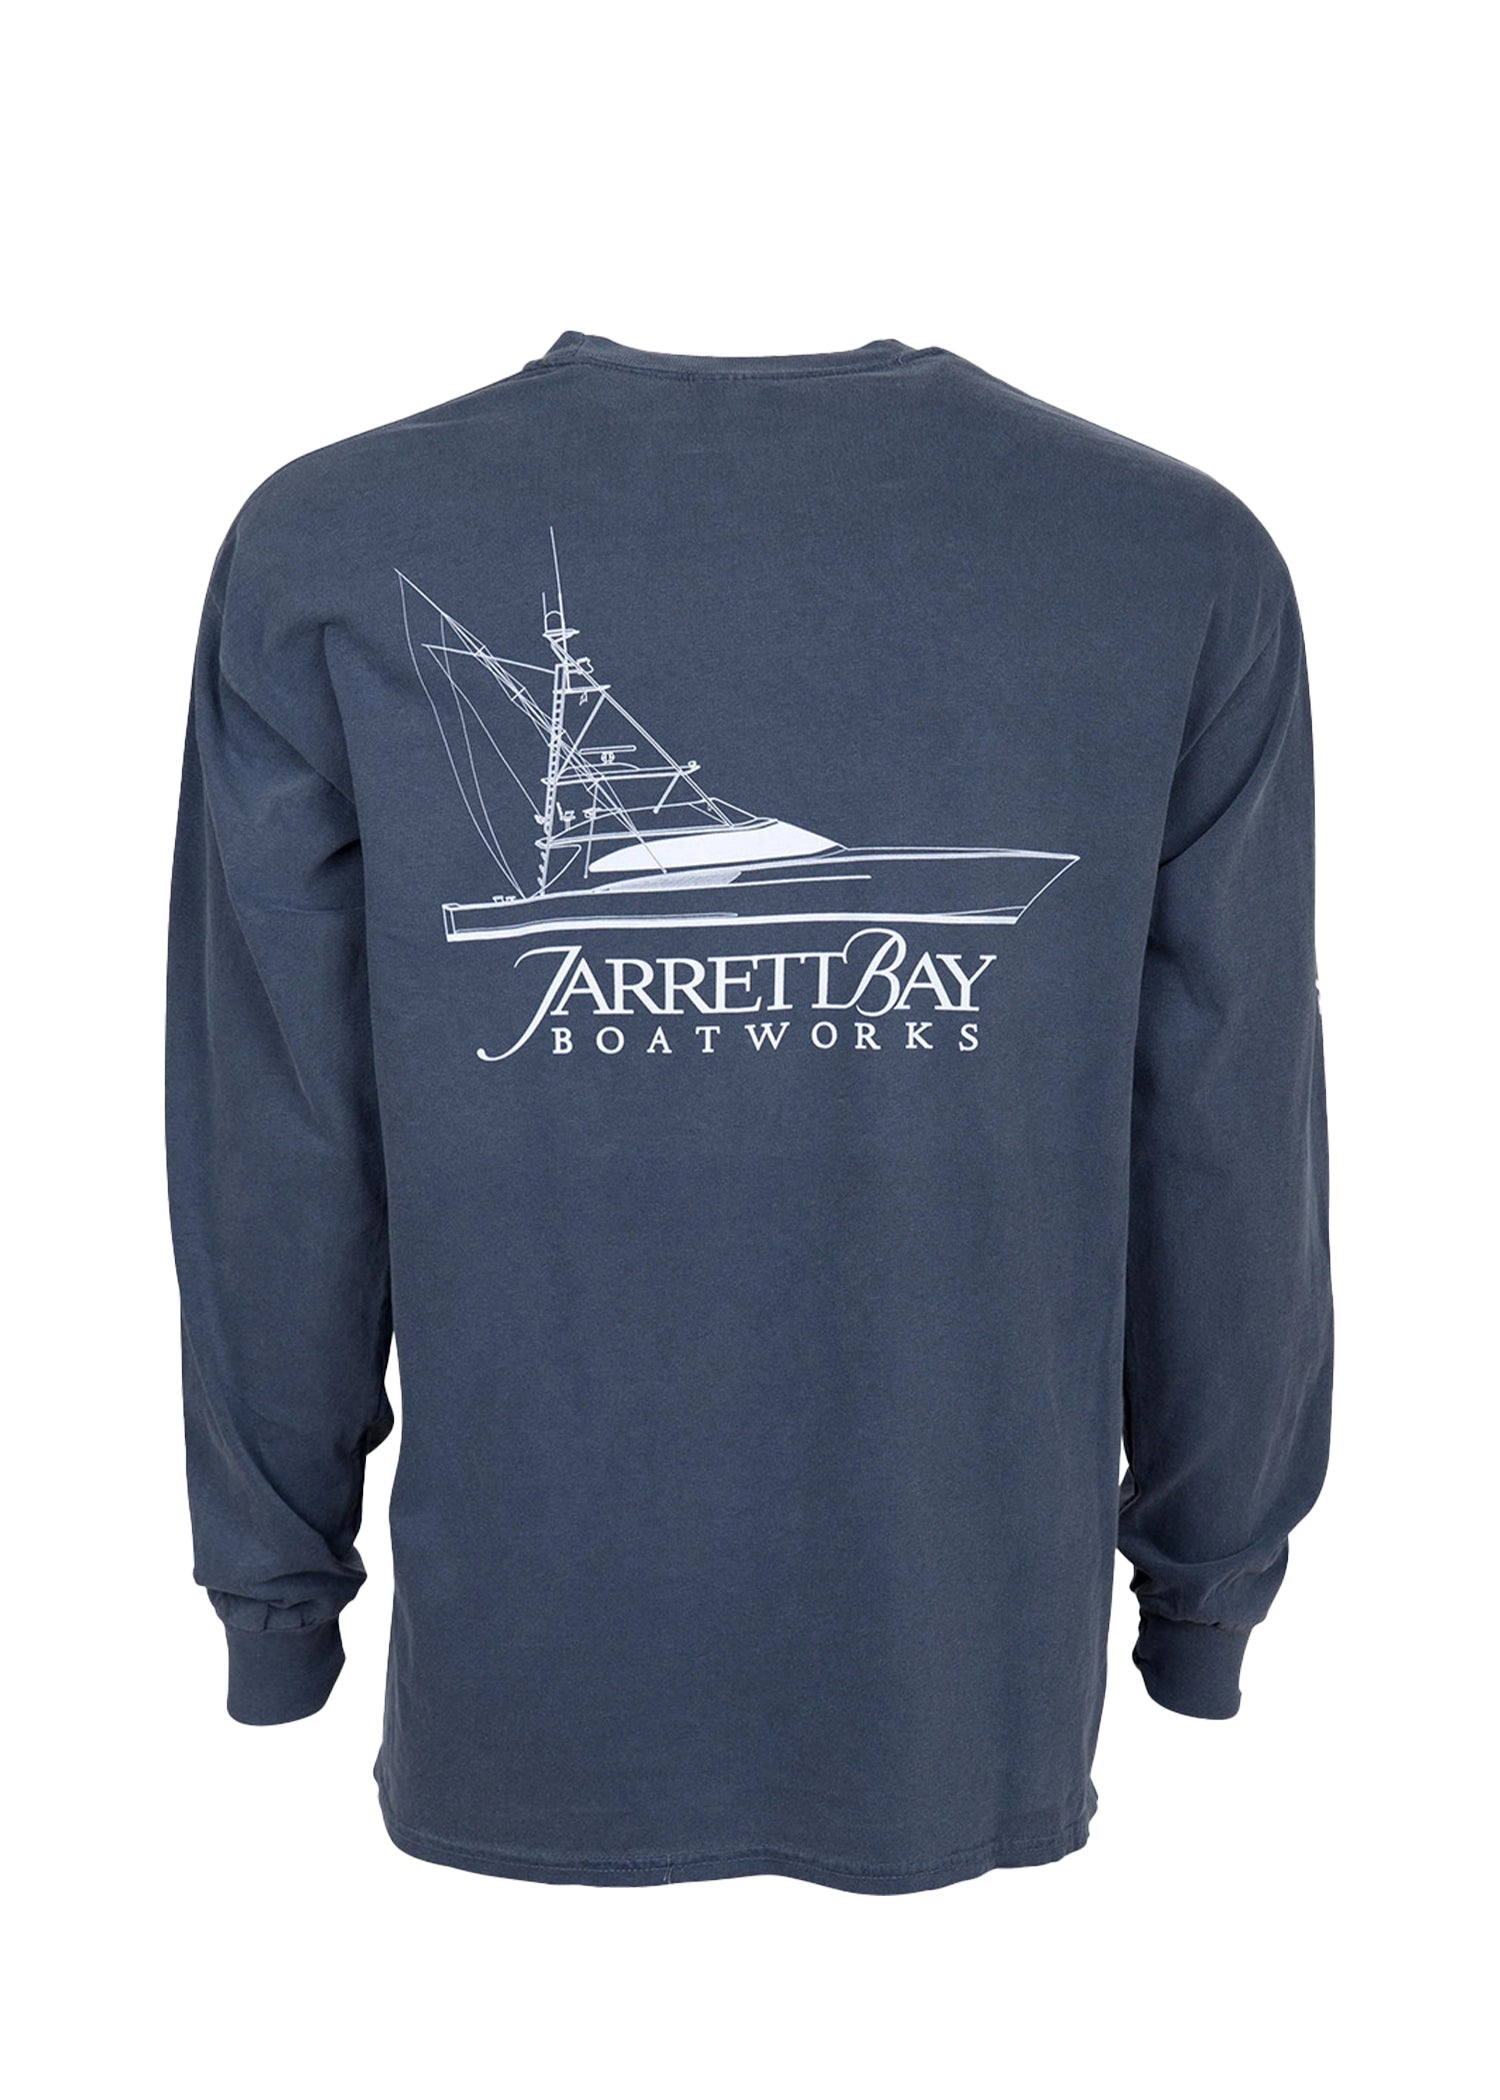 77 Line Drawing Long Sleeve T-shirt - Jarrett Bay Boathouse